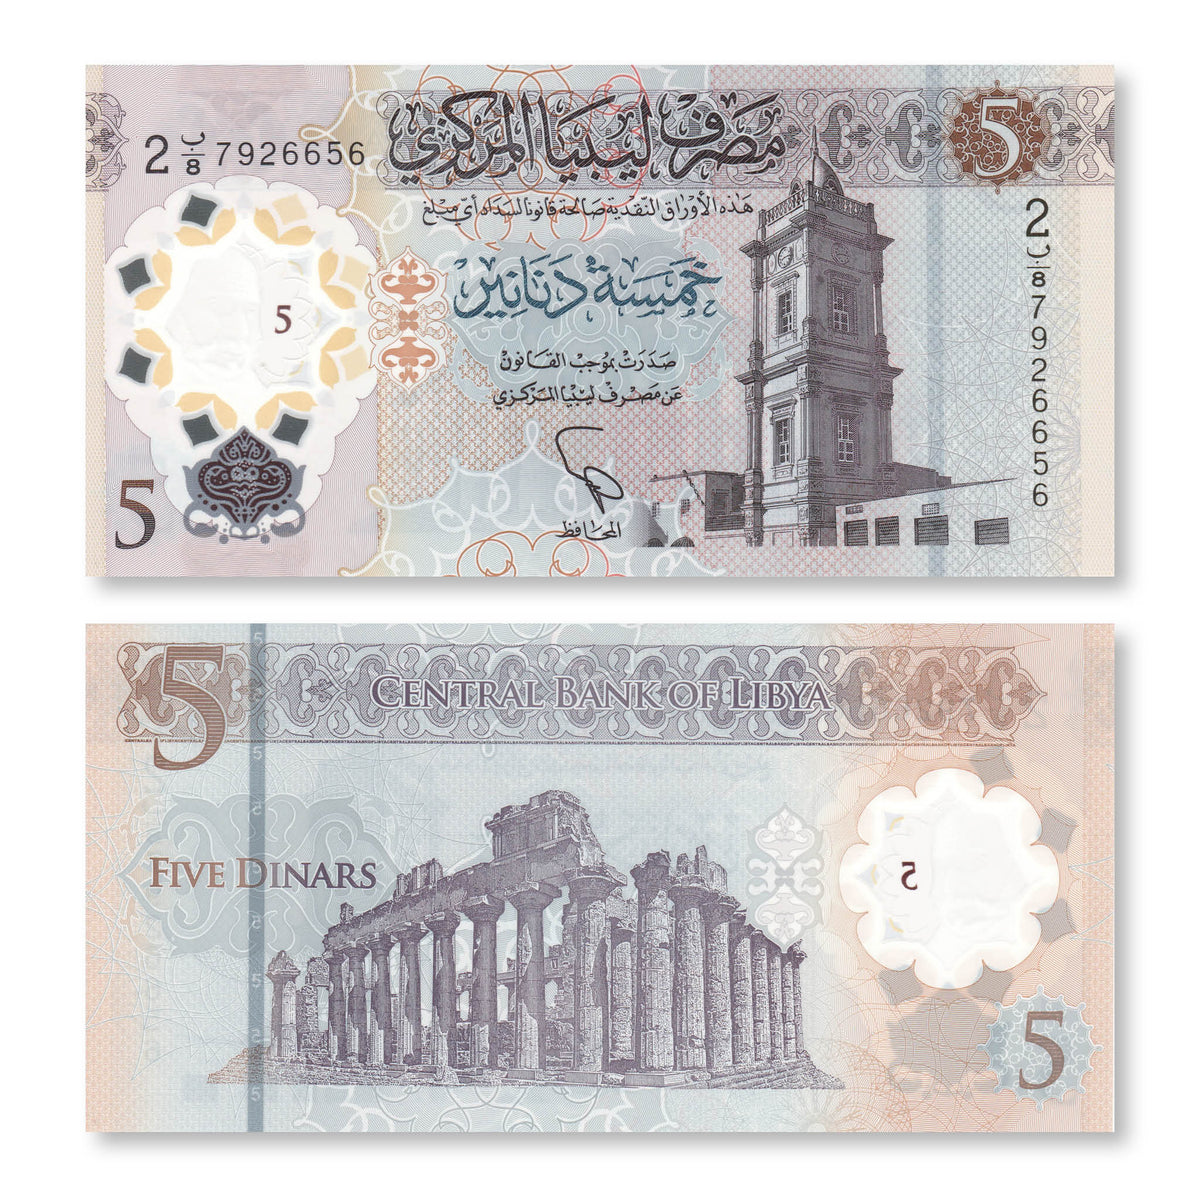 Libya 5 Dinars, 2021, B551a, UNC - Robert's World Money - World Banknotes